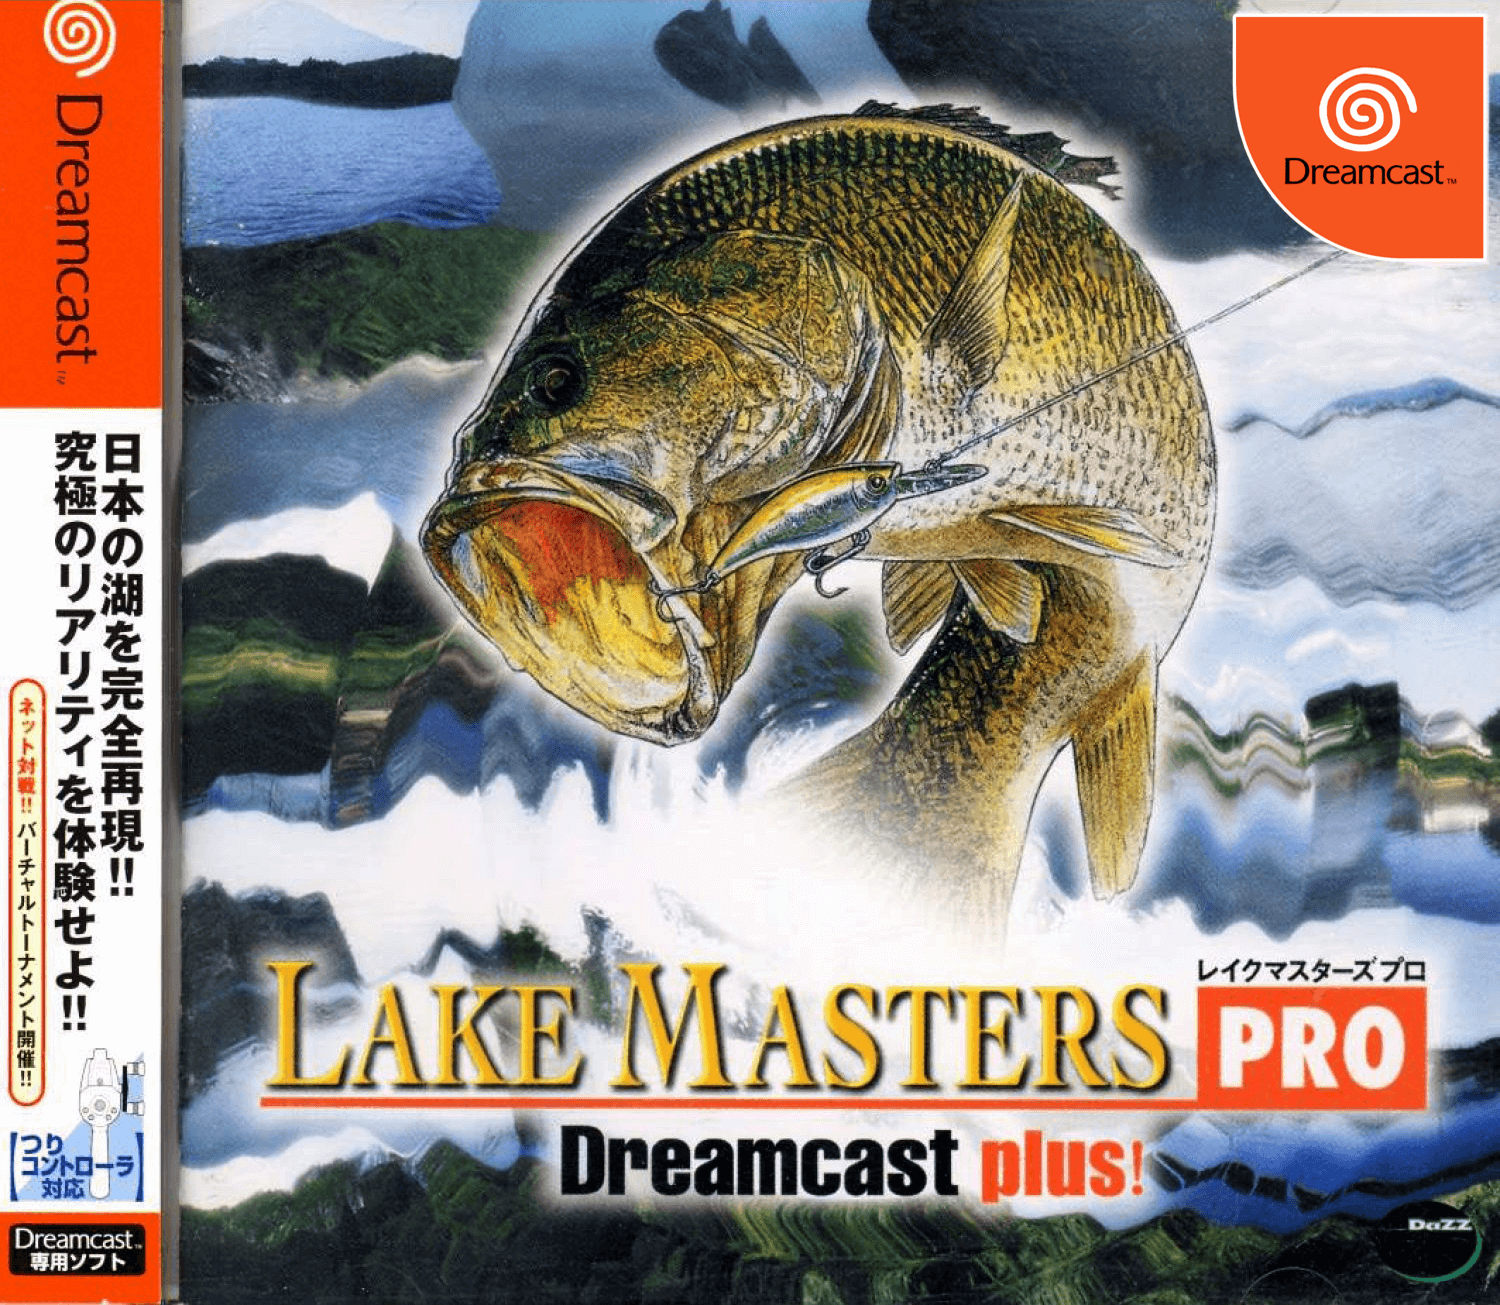 Lake Masters Pro Dreamcast Plus!